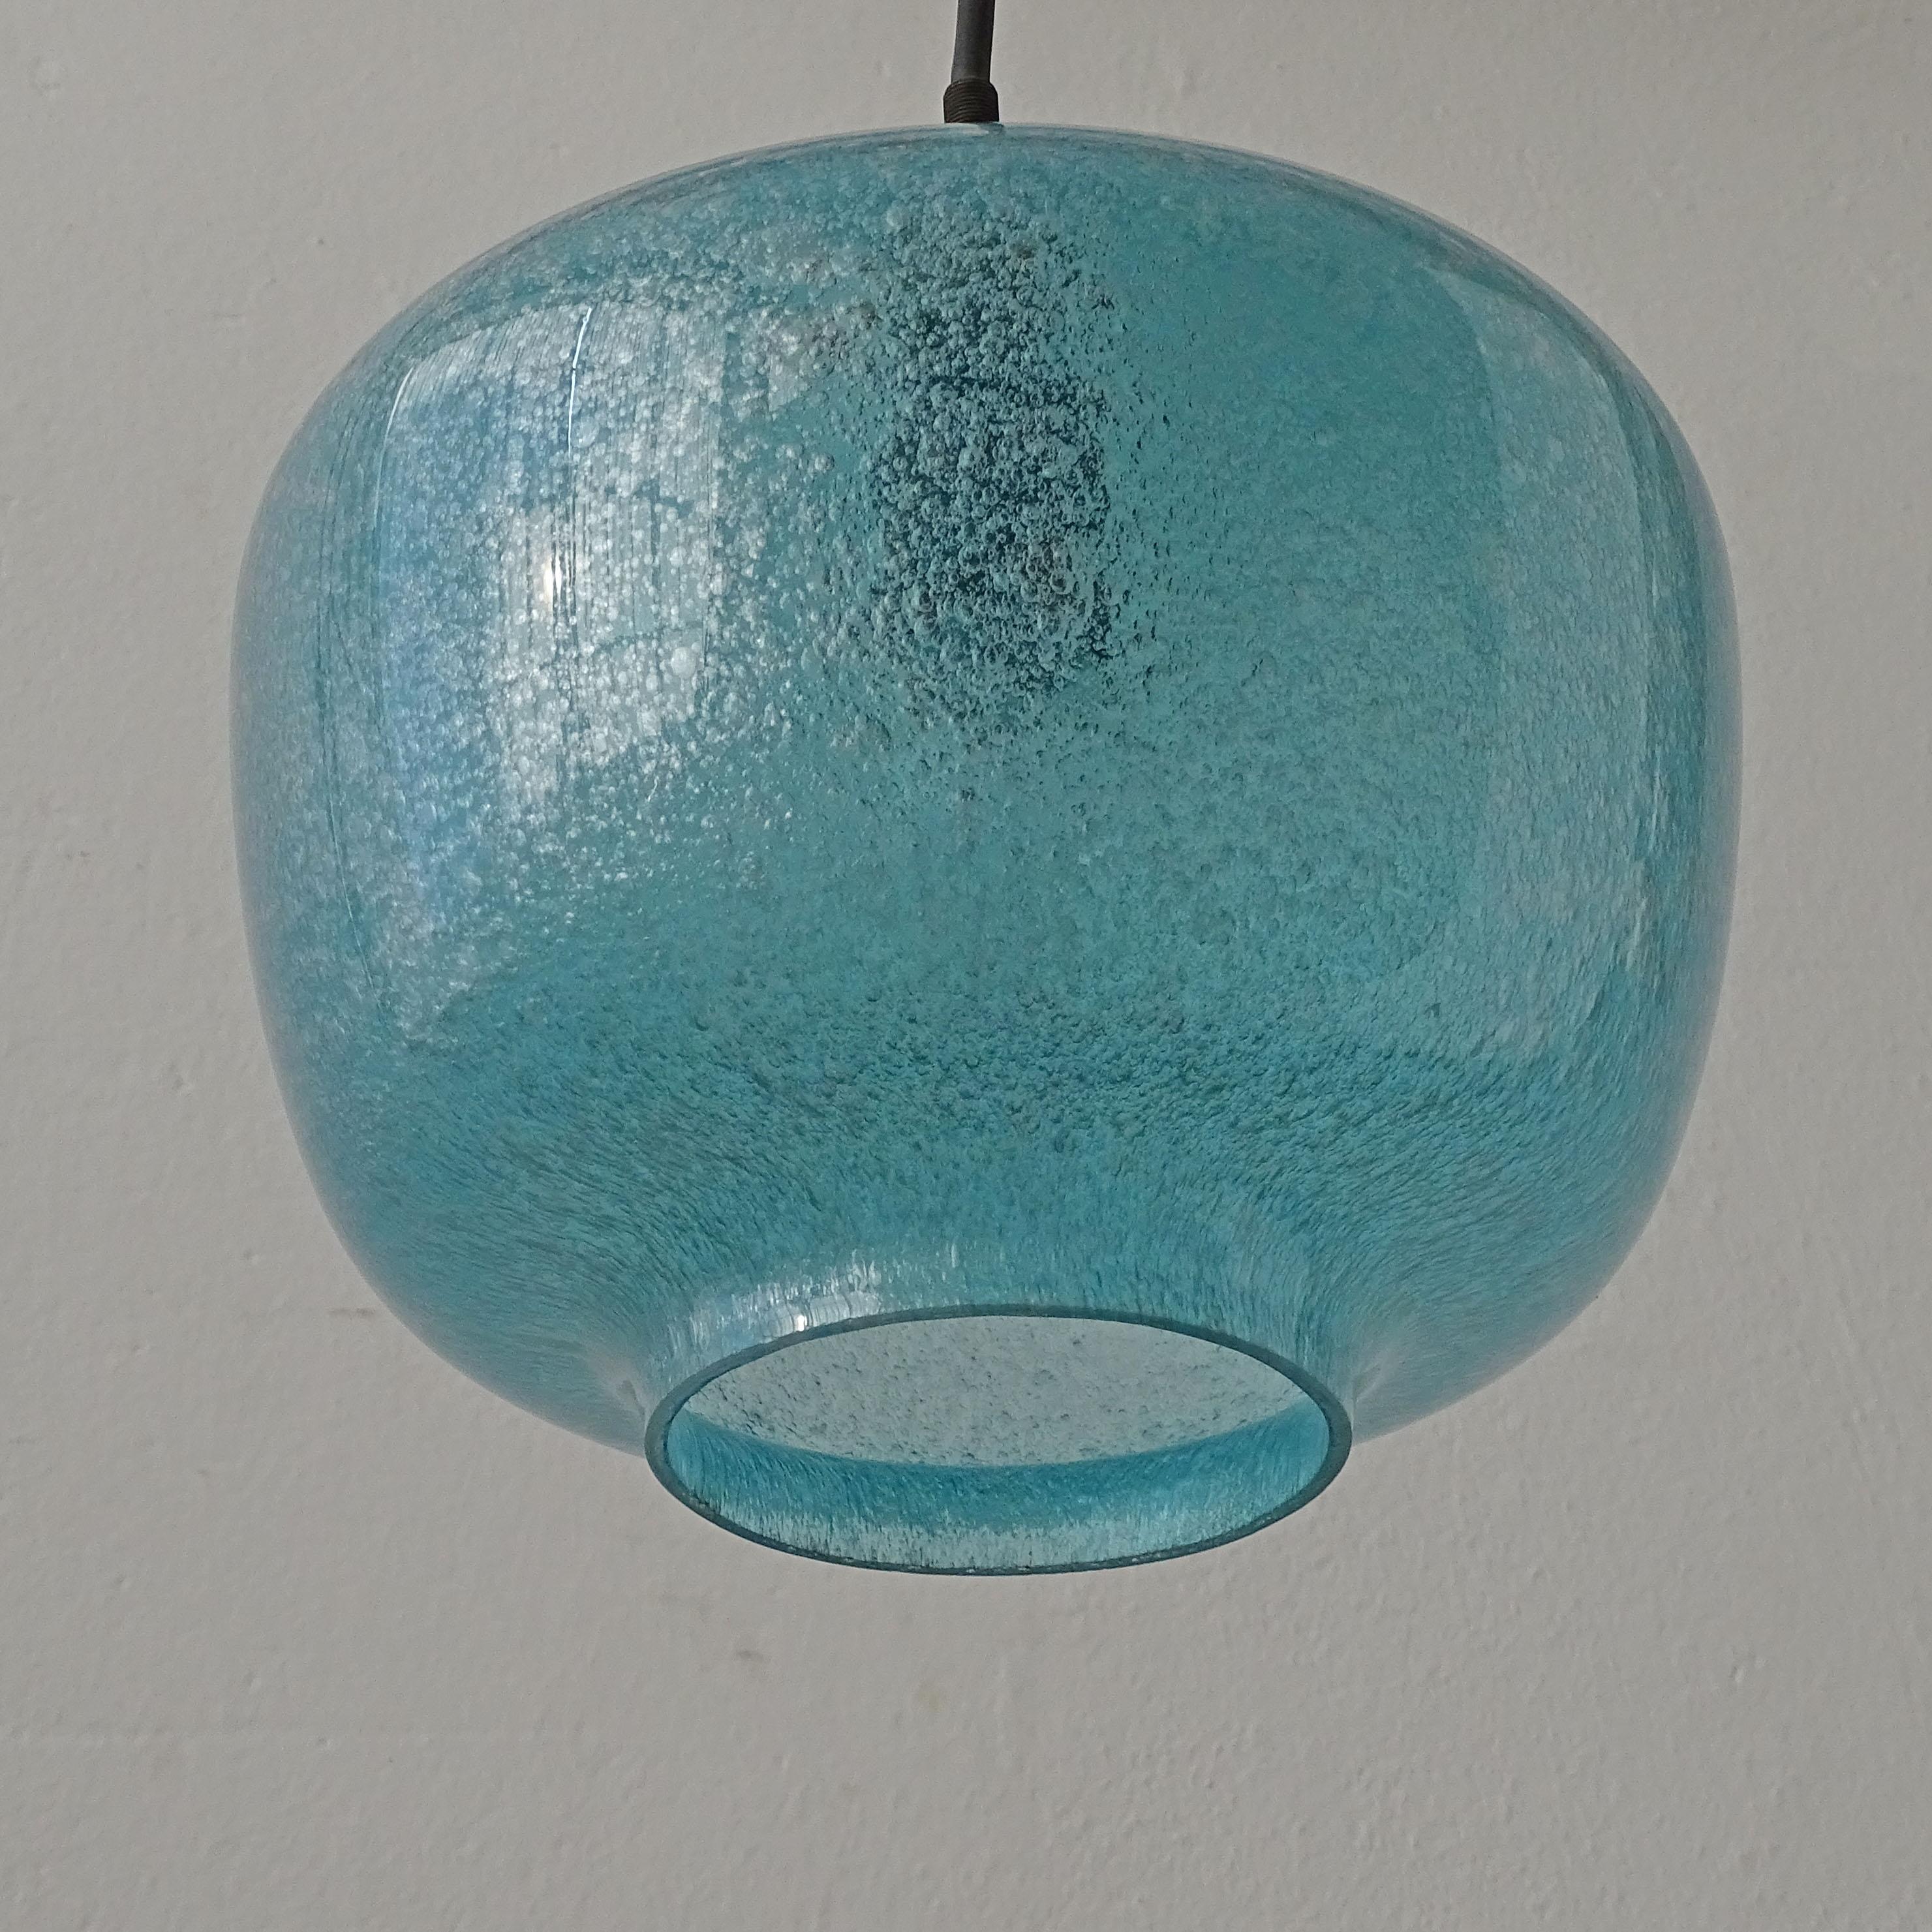 Seguso Vetri d'Arte sky blue Bollicine Murano glass pendant lamps, 
Italy 1950s
Glass shade D 24 x H 29 cm